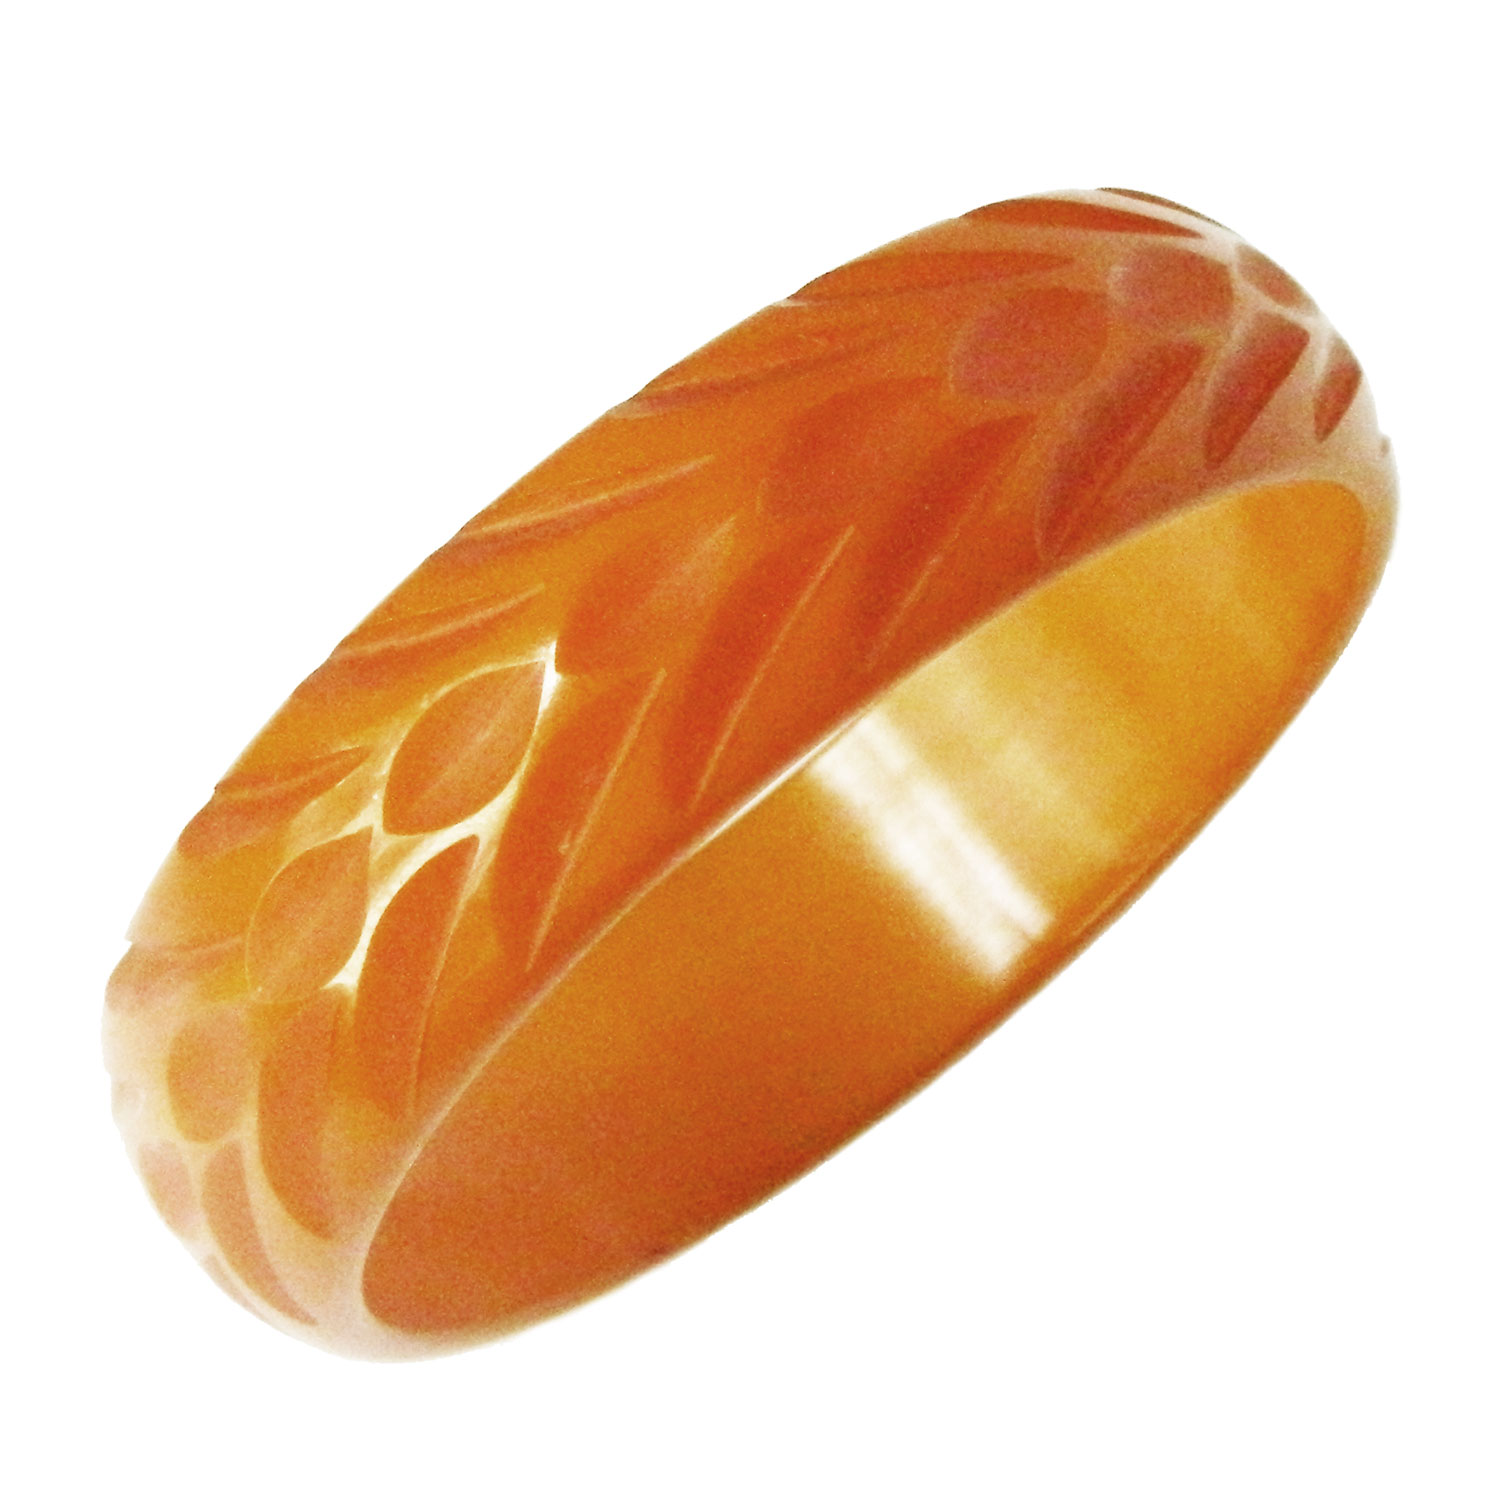 Carved orange bakelite bangle